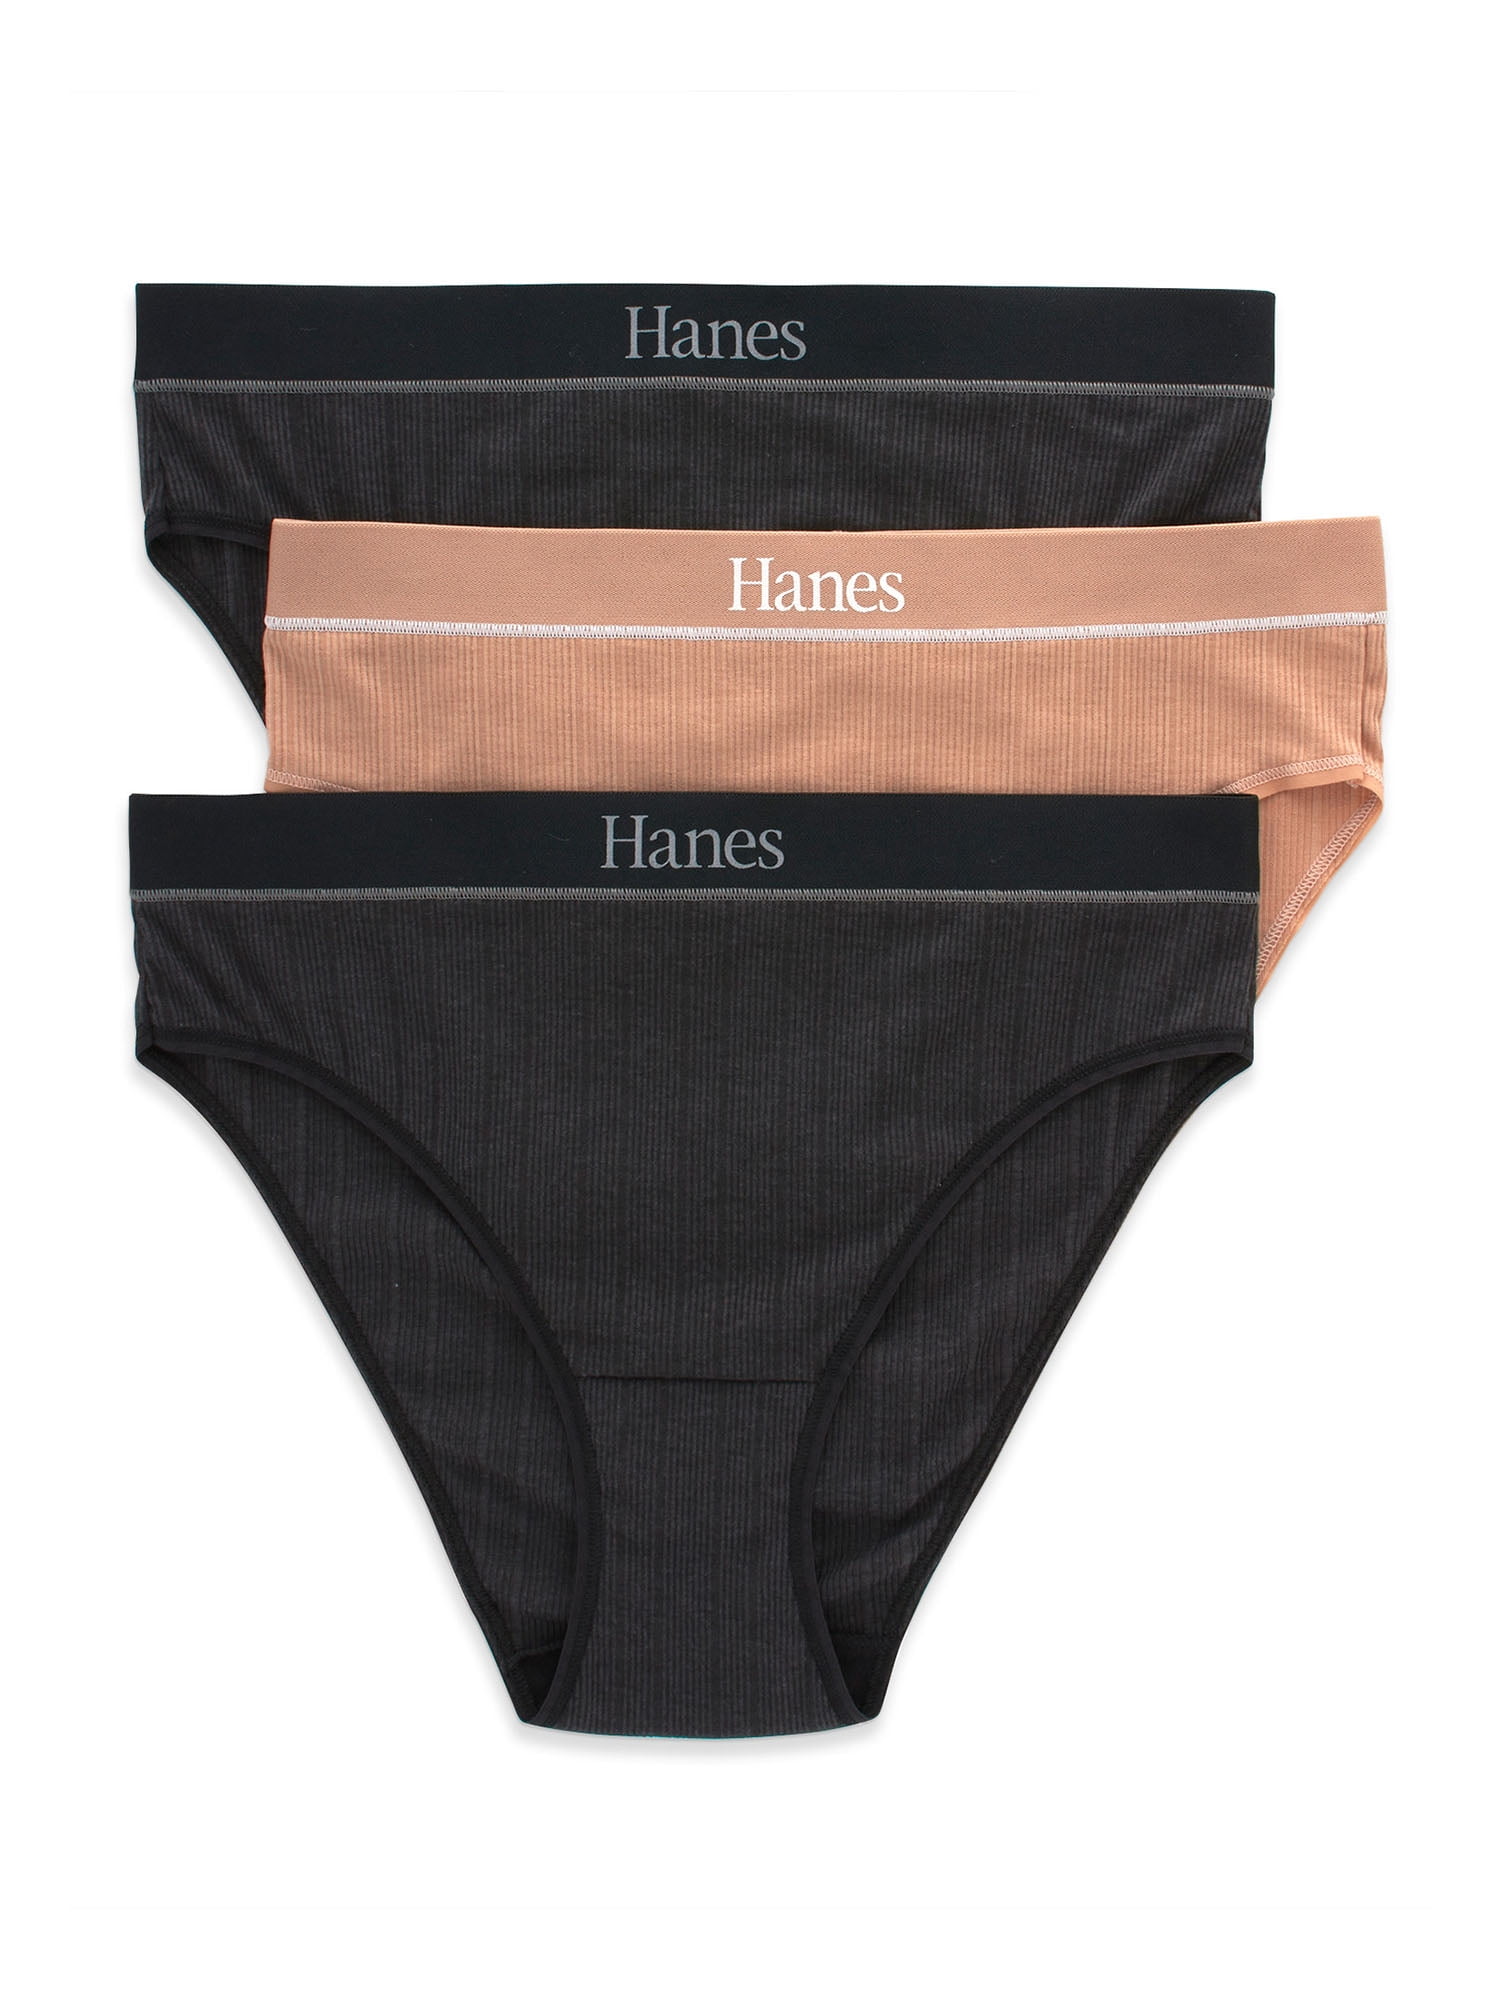 Hanes Women's Briefs (Pack of 3)